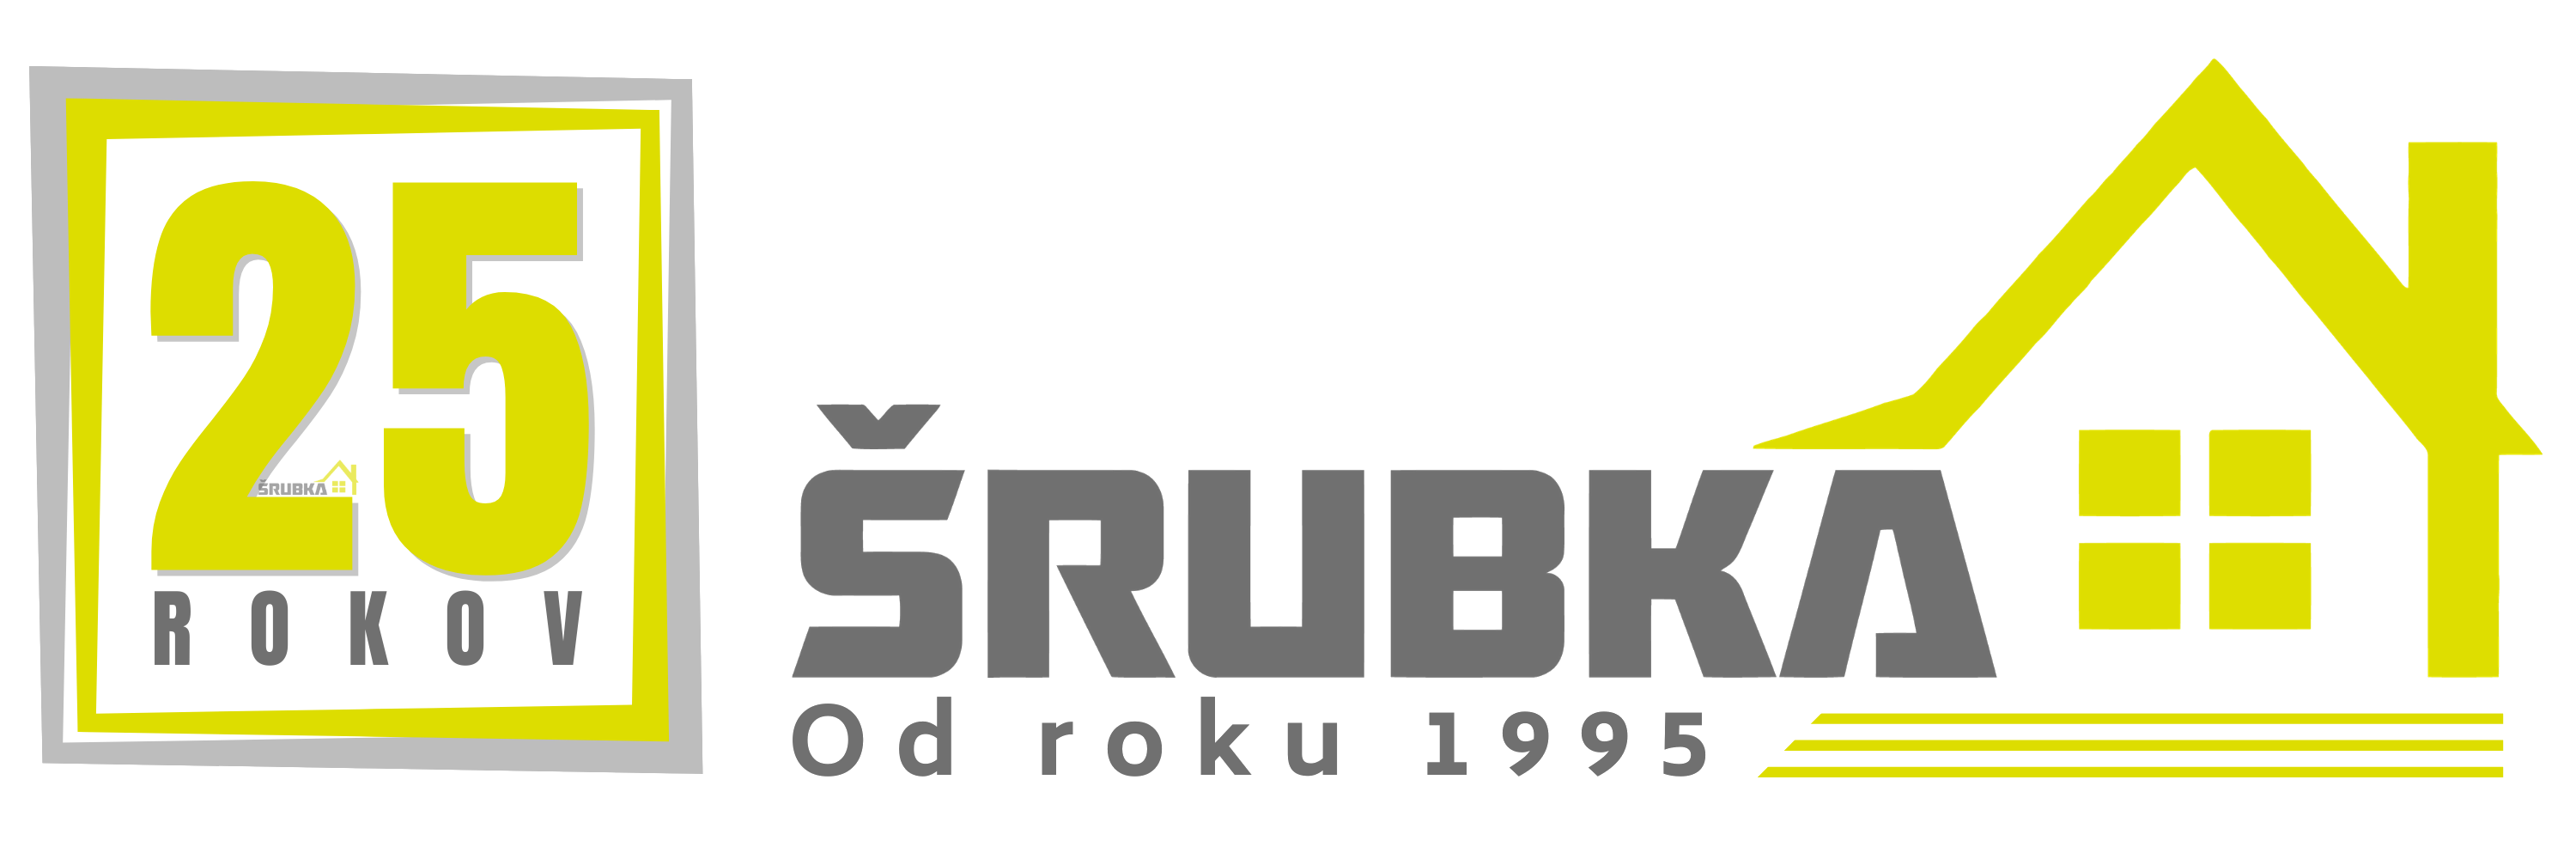 šrubka logo